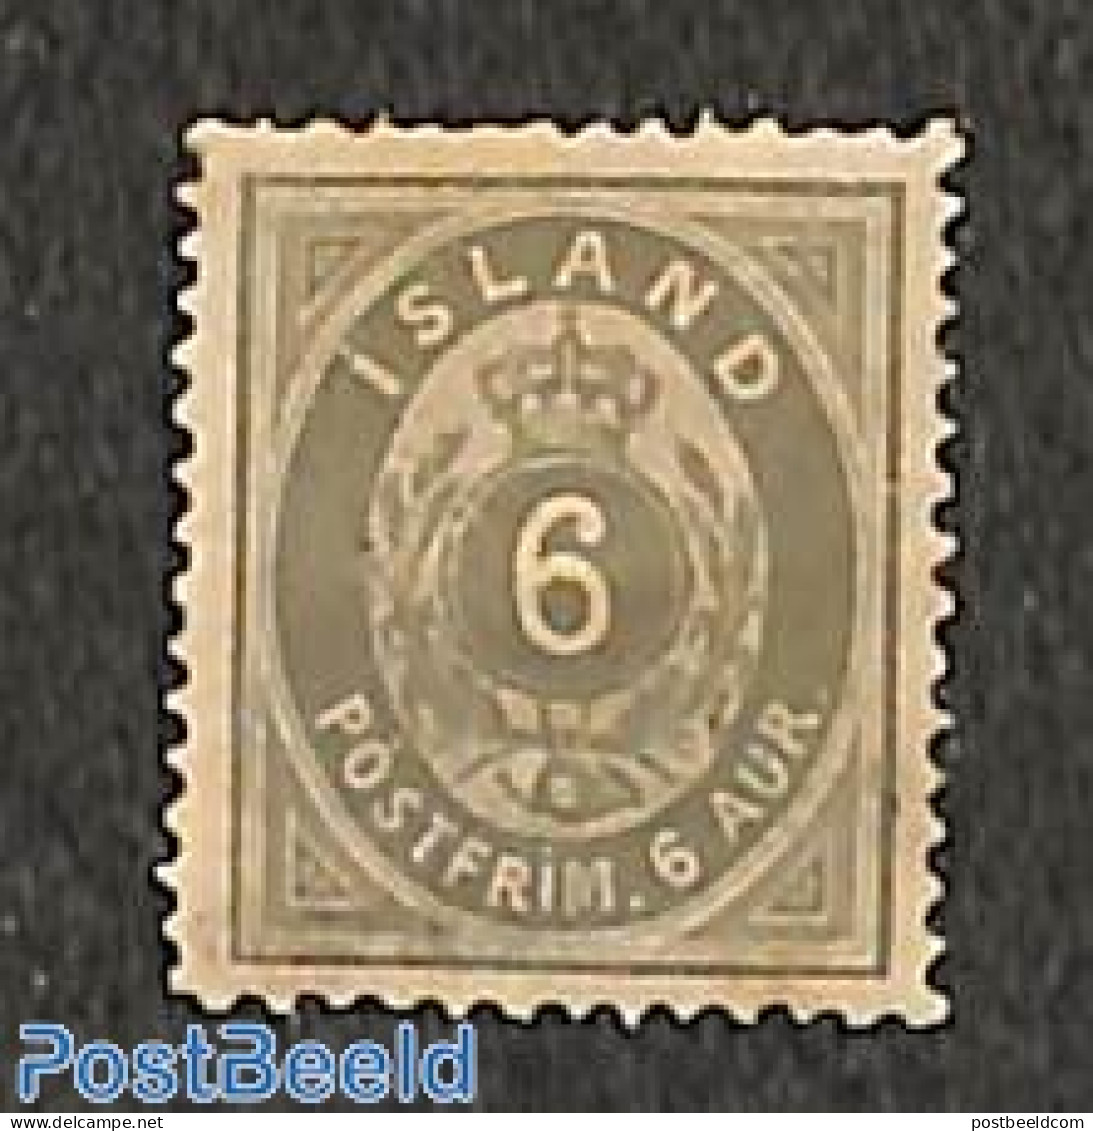 Iceland 1876 6A, Perf. 14:13.5, Stamp Out Of Set, Unused (hinged) - Unused Stamps